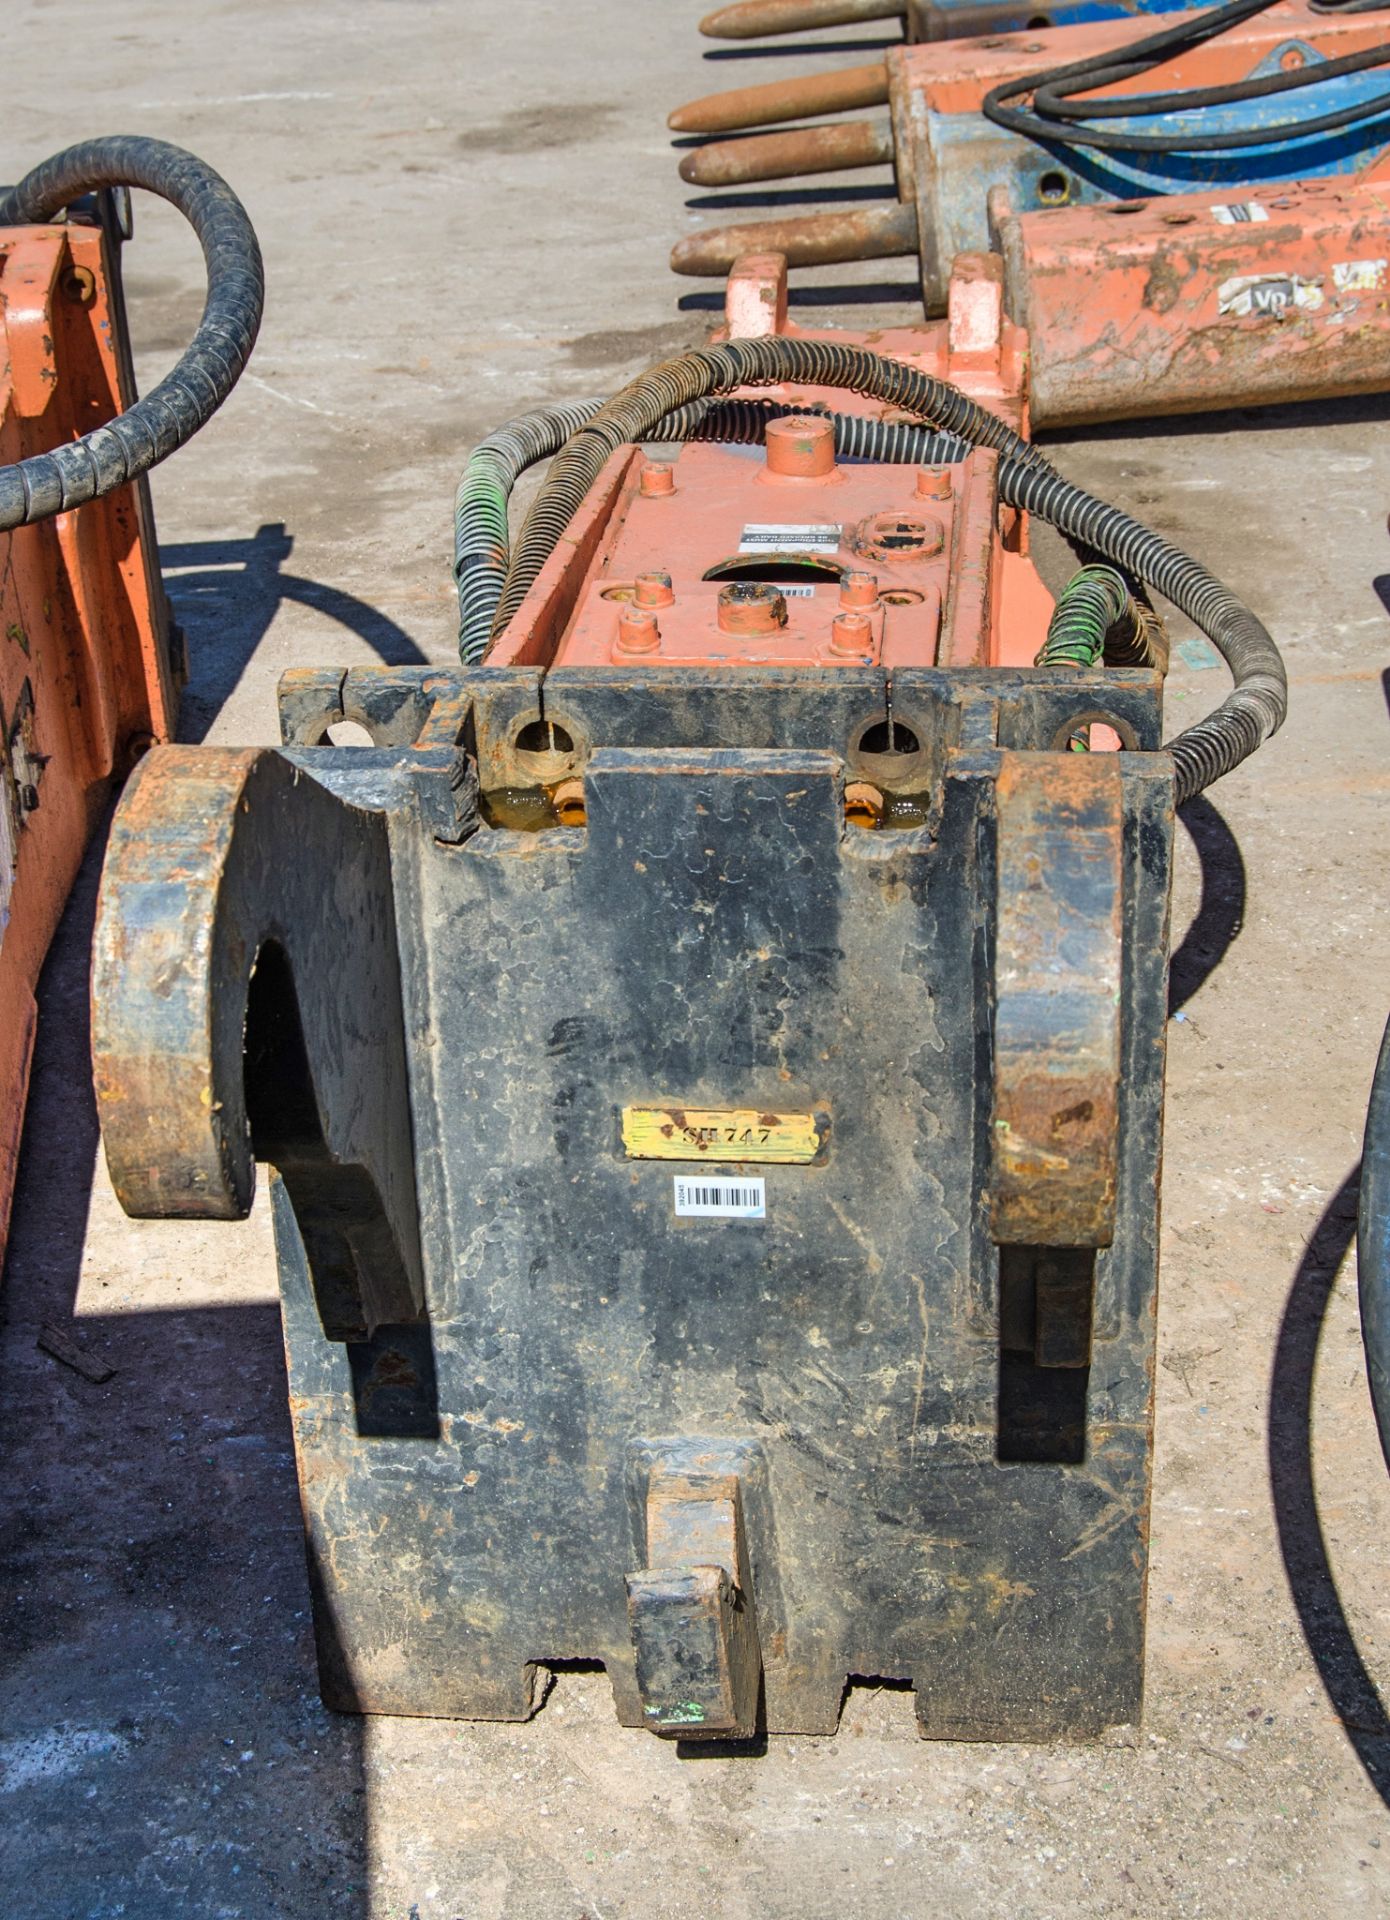 Prodem hydraulic breaker to suit 13-18 tonne excavator c/w hook/ bull horn headstock SH747 - Bild 4 aus 4